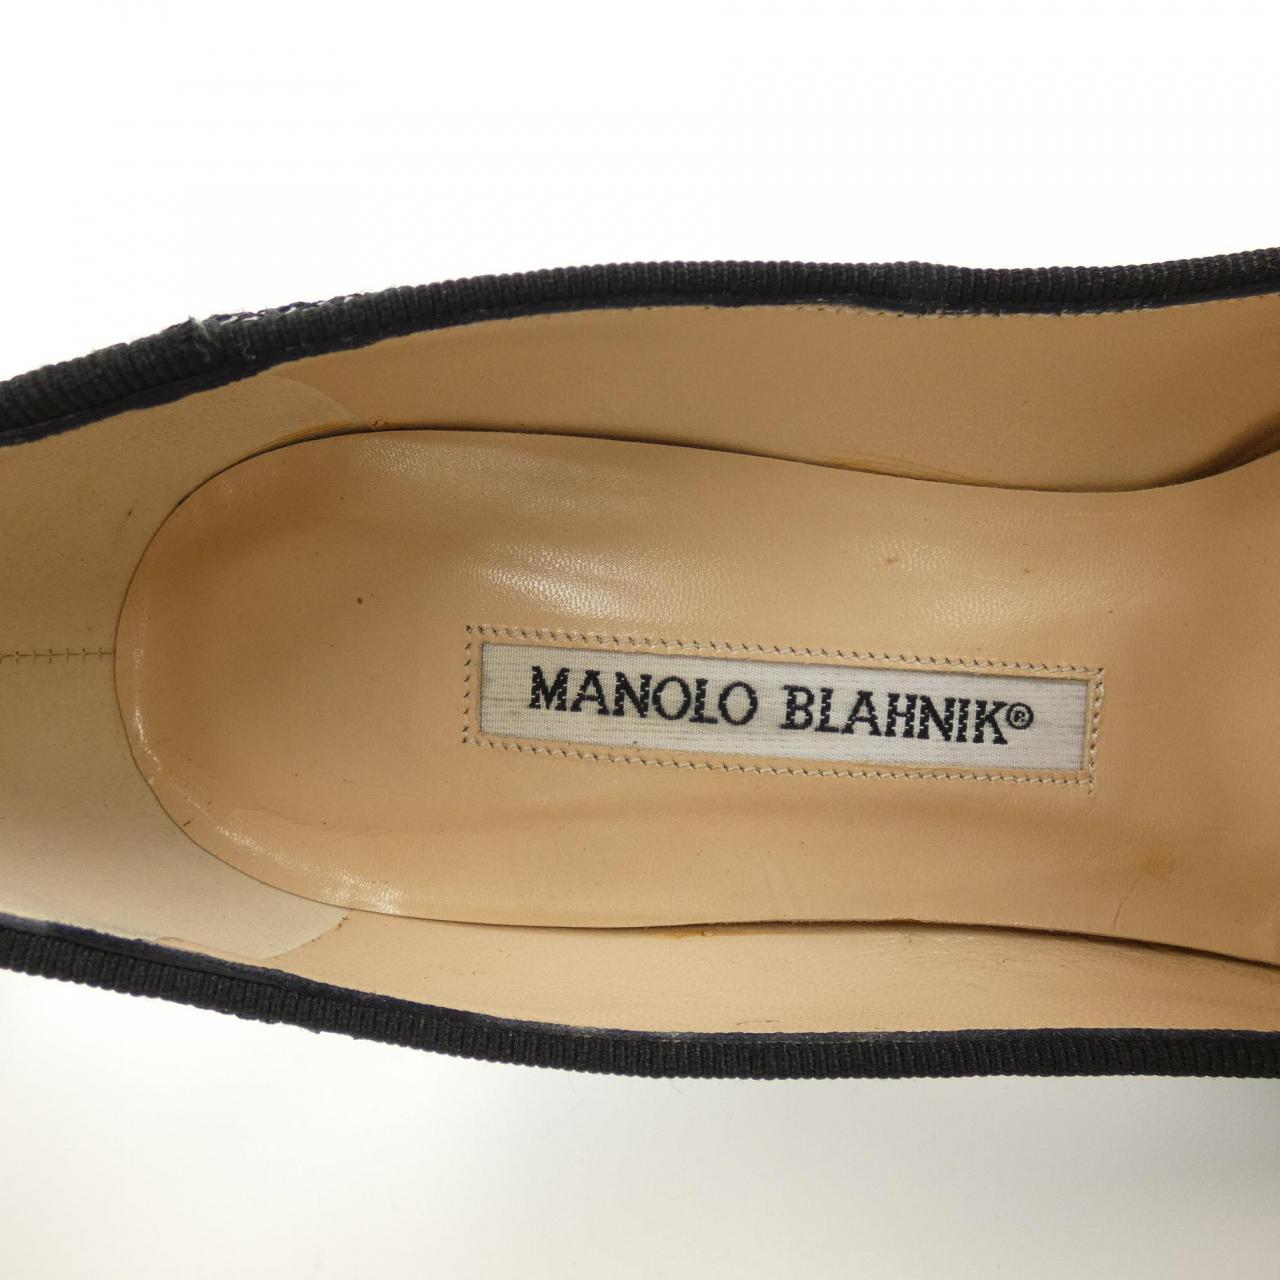 MANOLO BLAHNIK ·伯拉尼克 (manolo blahnik) 高跟鞋